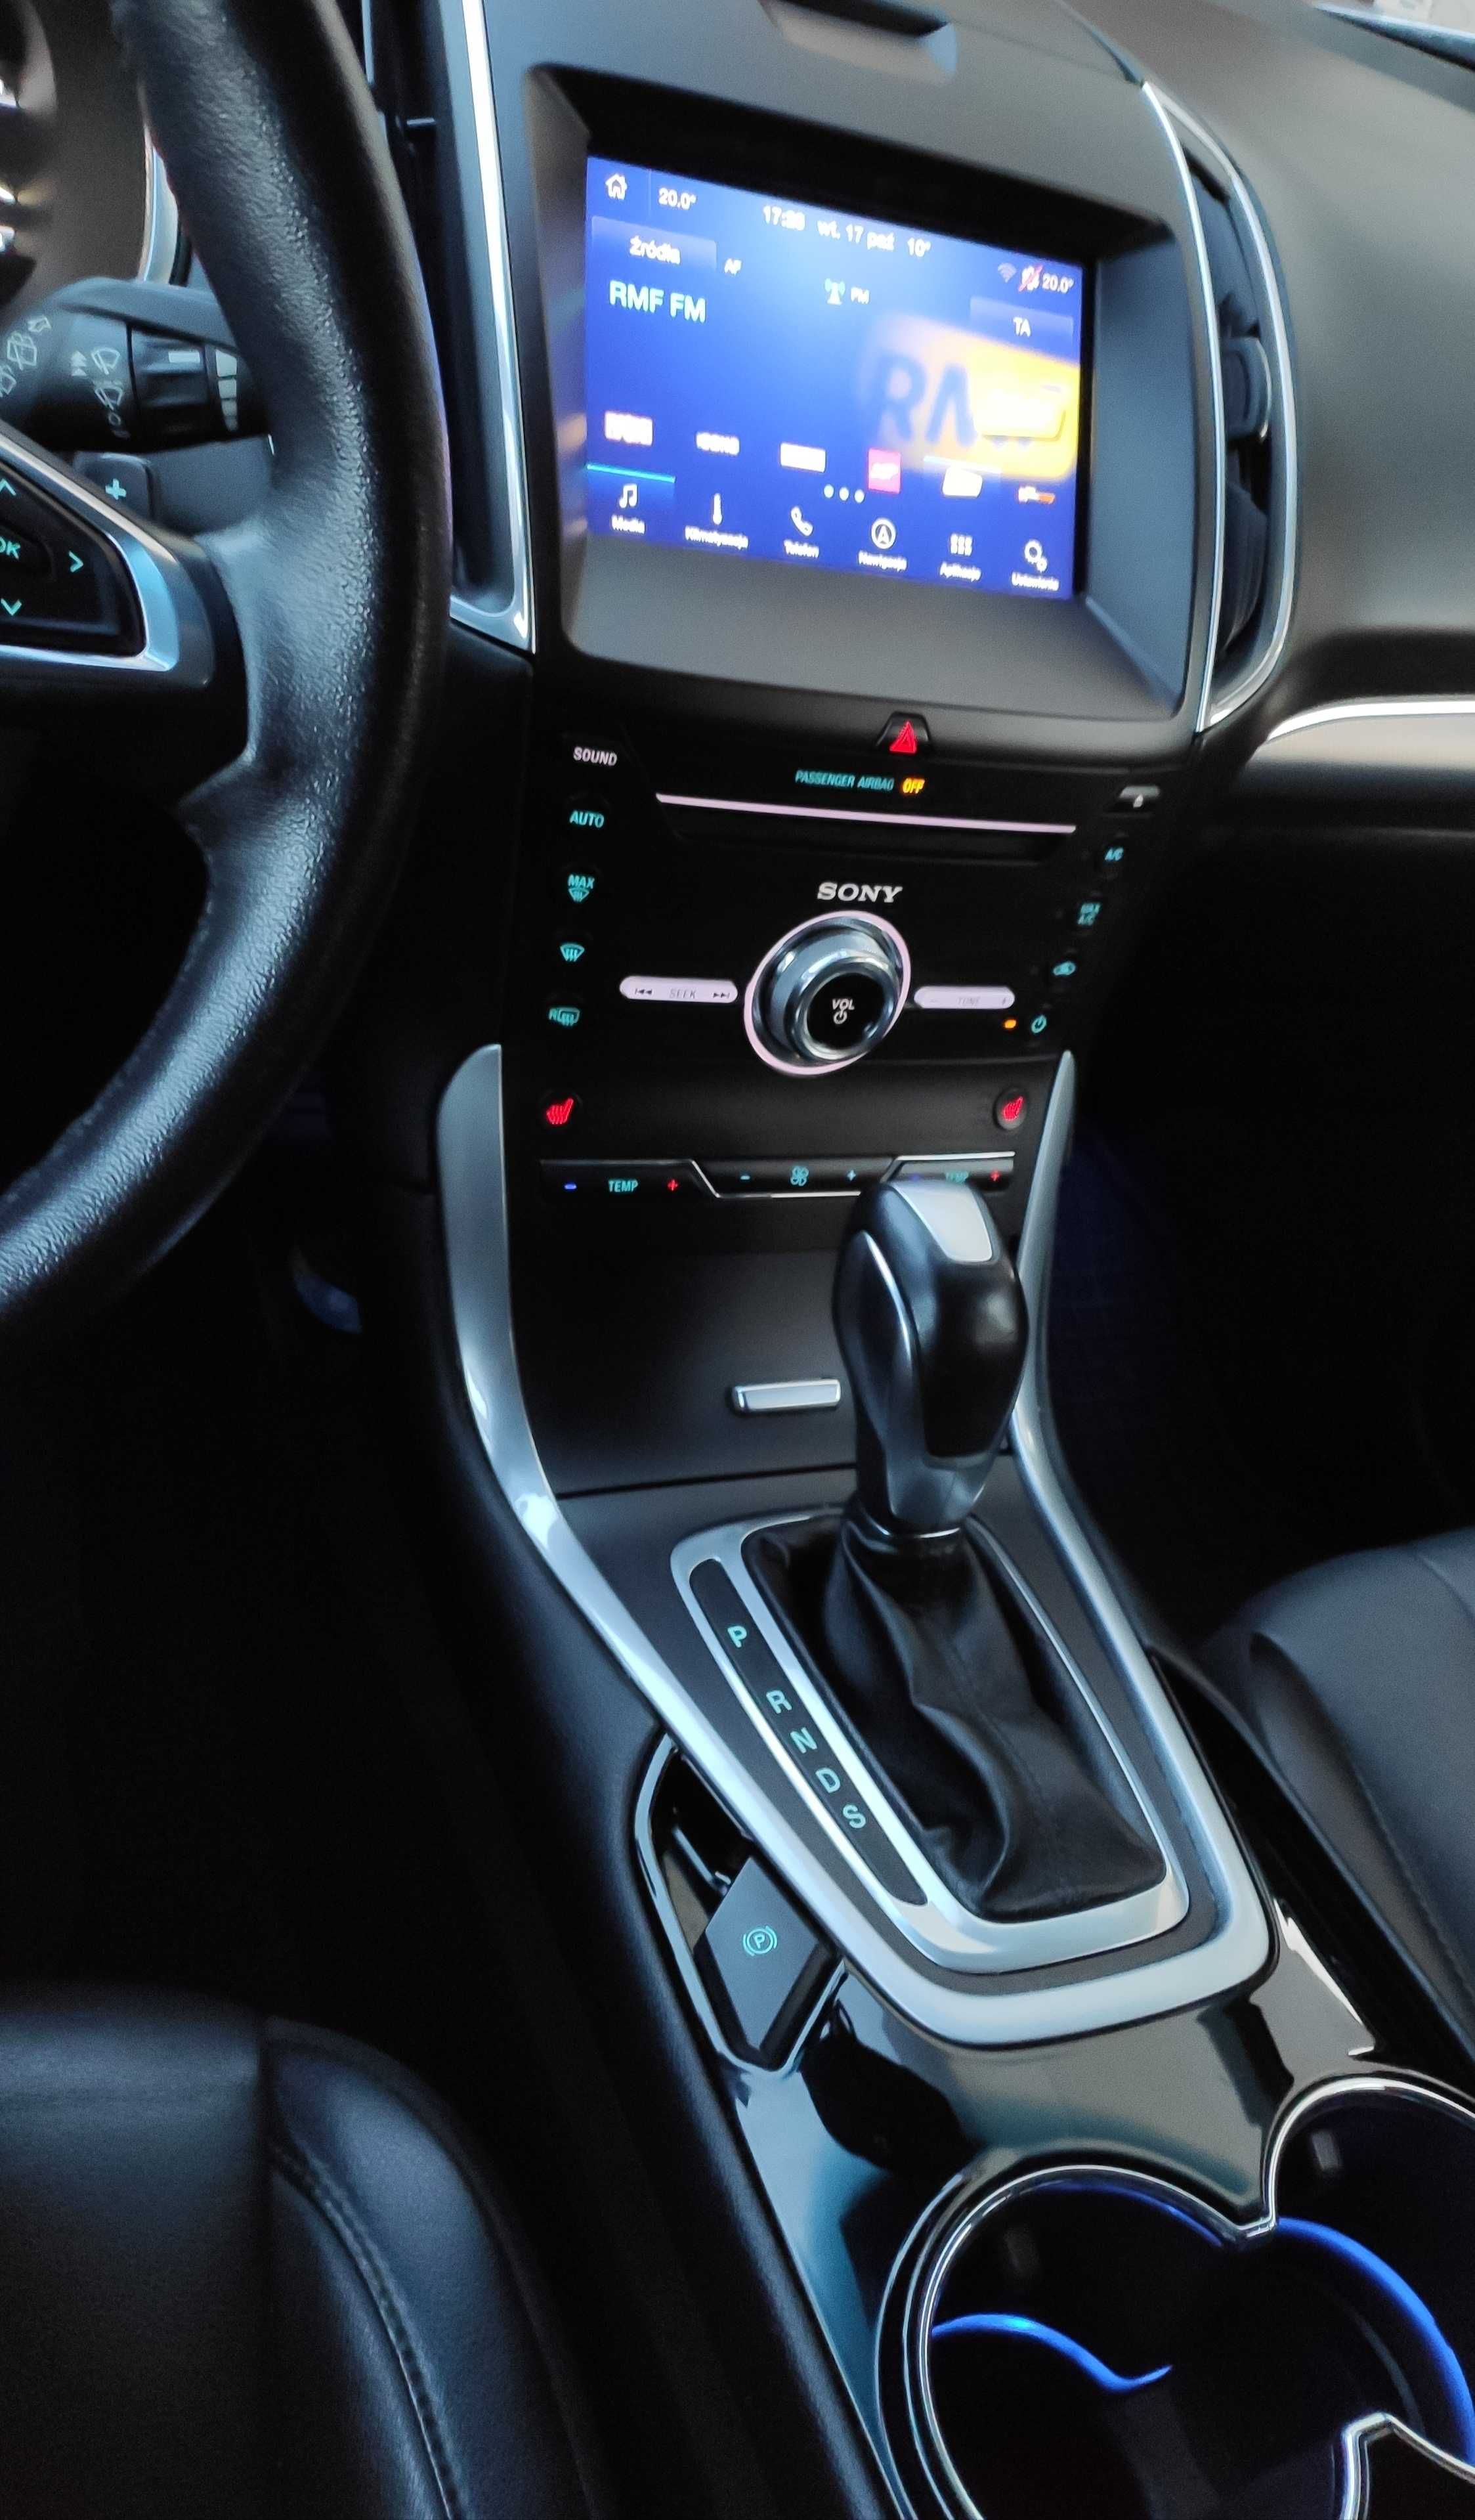 Ford EDGE TITANIUM 2018 4x4 19" sync3 keyless navi PL zamiana